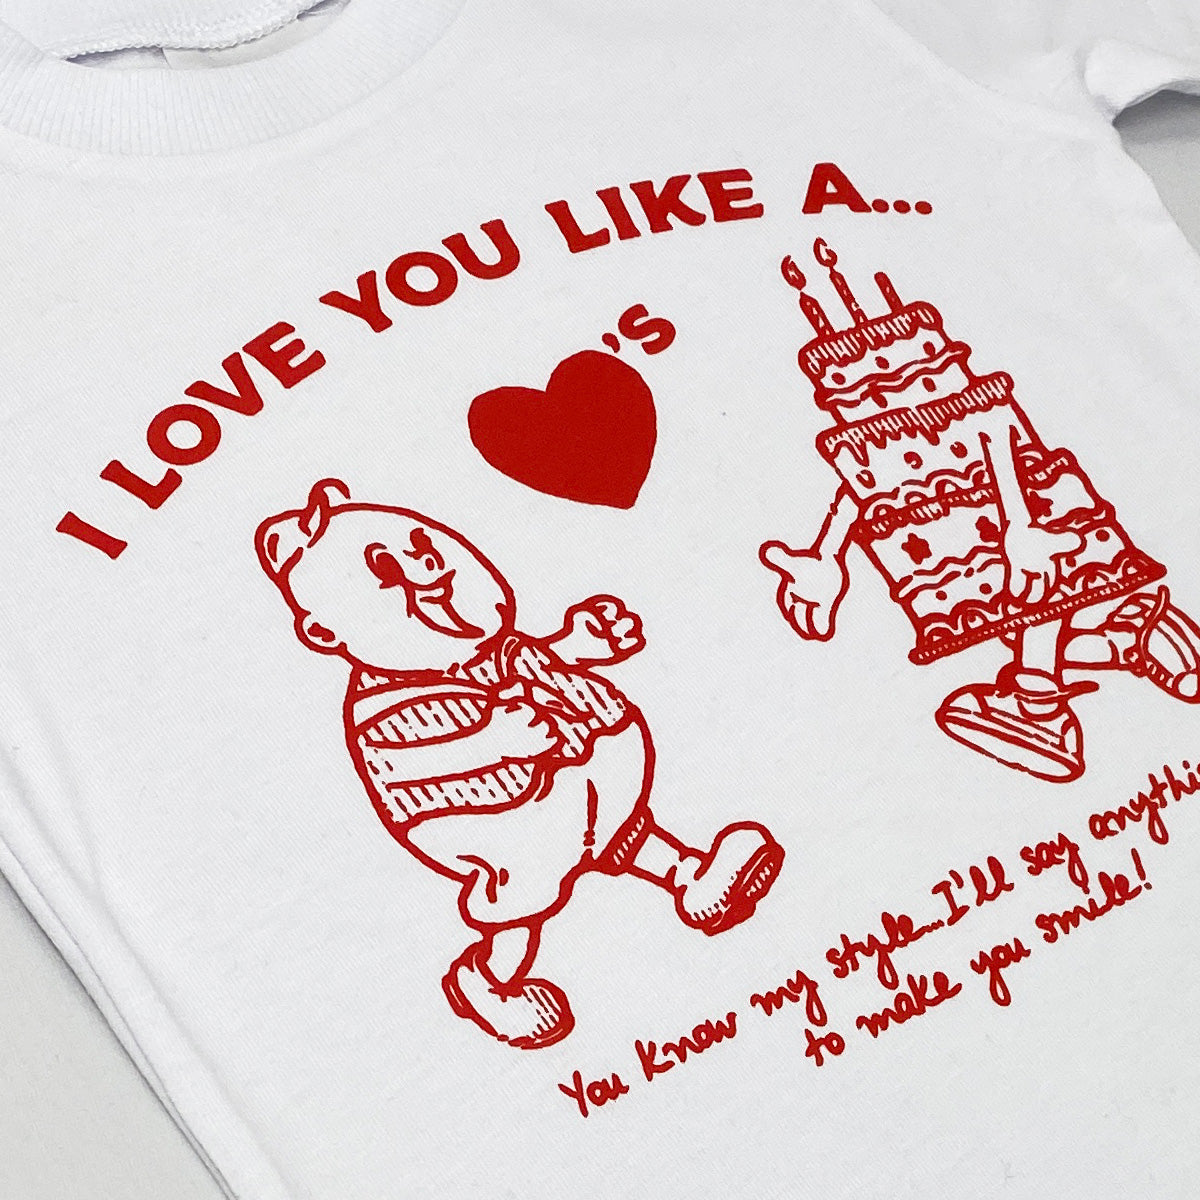 Love You Like T-shirt (White)